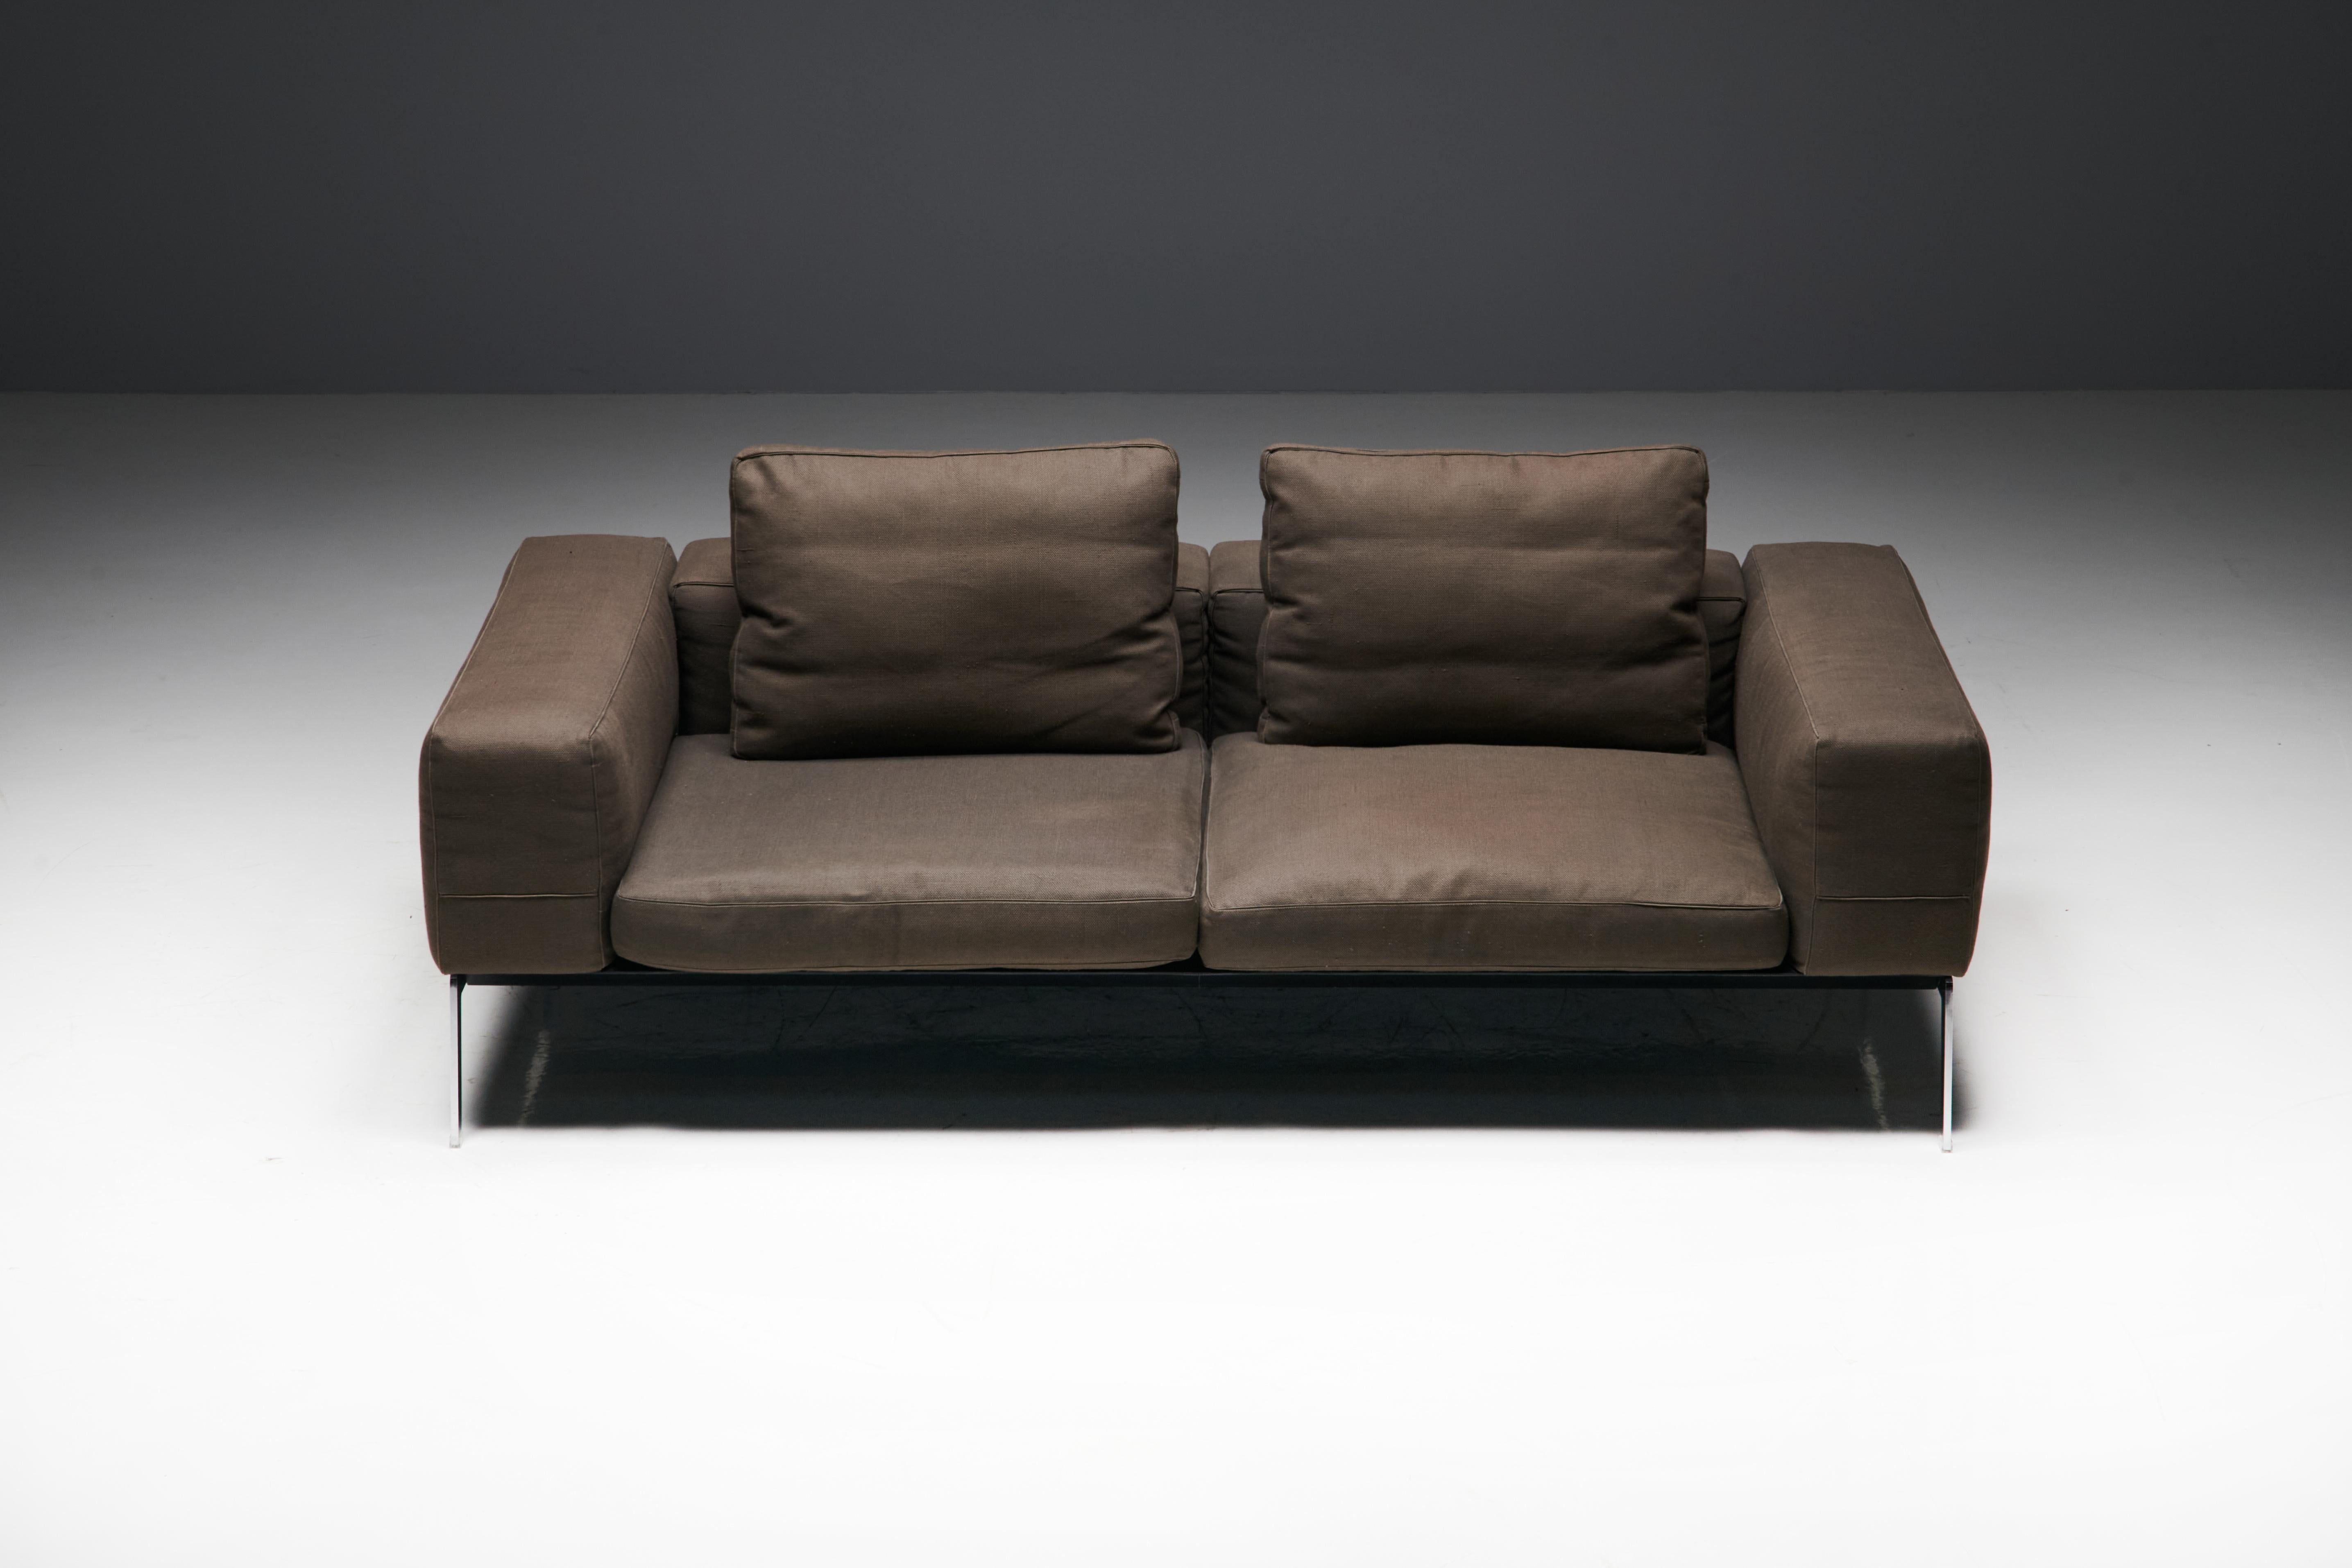 Contemporary Lifesteel Sofa by Antonio Citterio for Flexform, Italy, 2018 For Sale